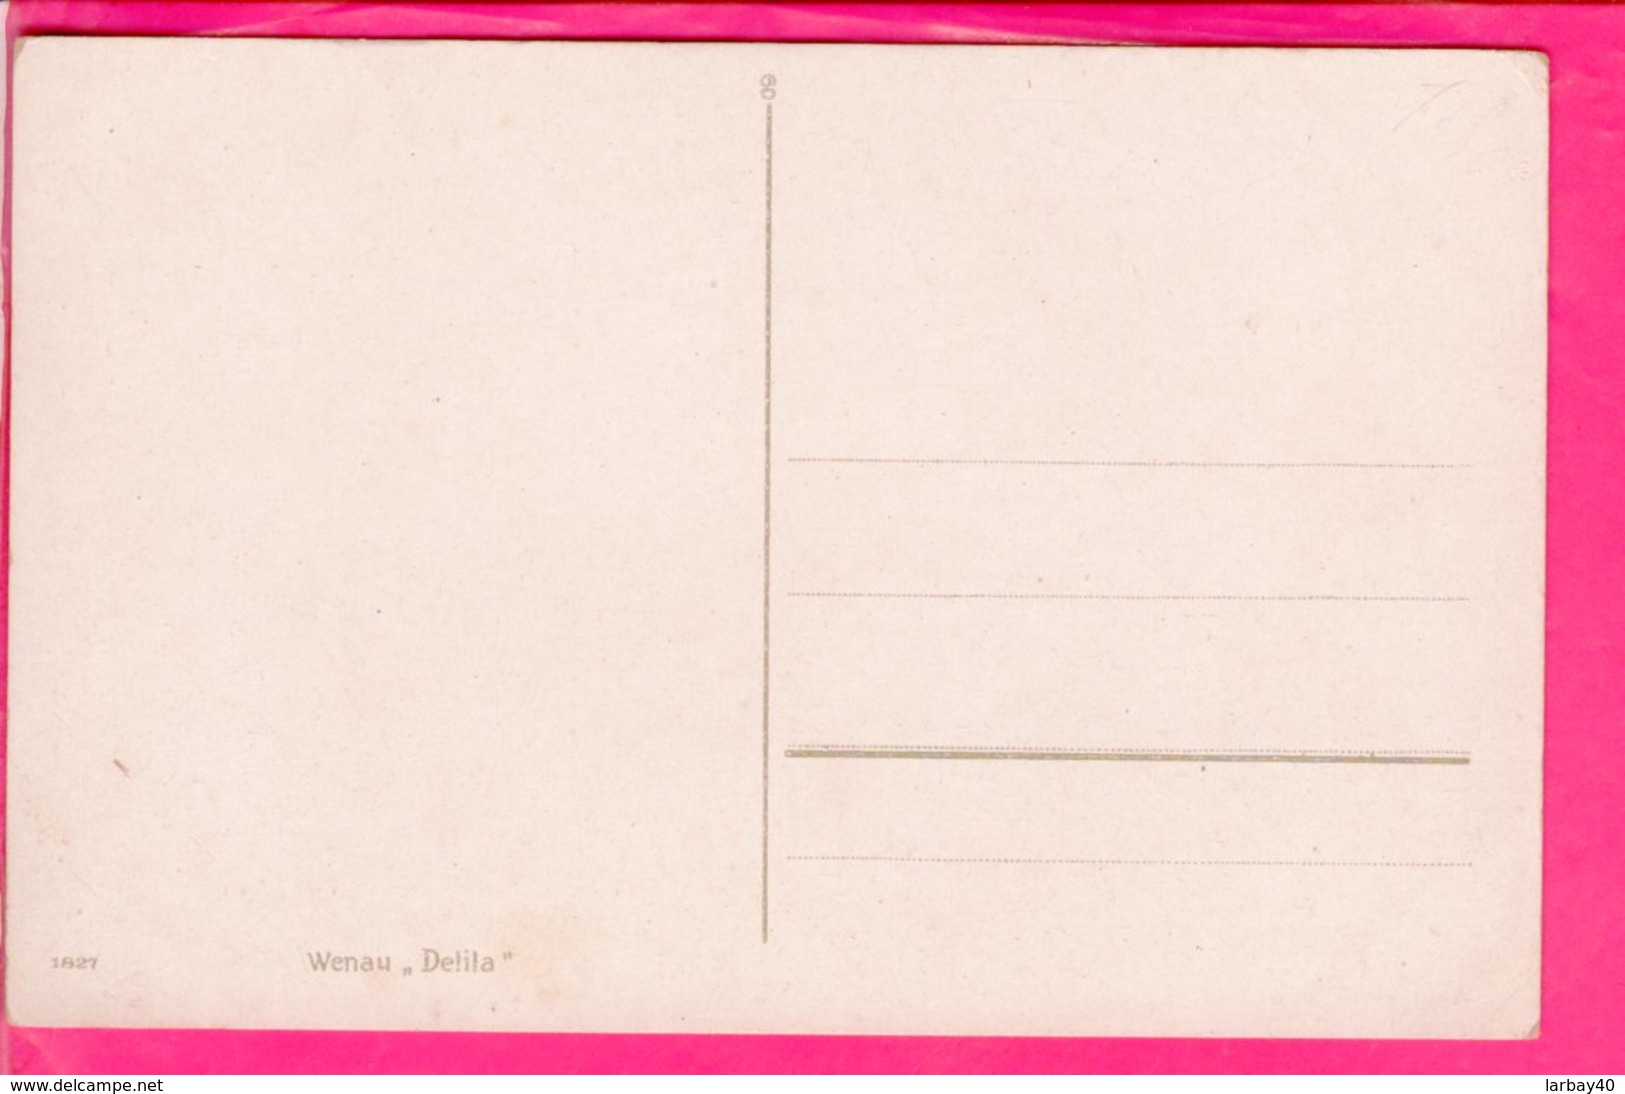 Cpa Carte Postale Ancienne  - Illustrateur Doubek - Doubek, F.